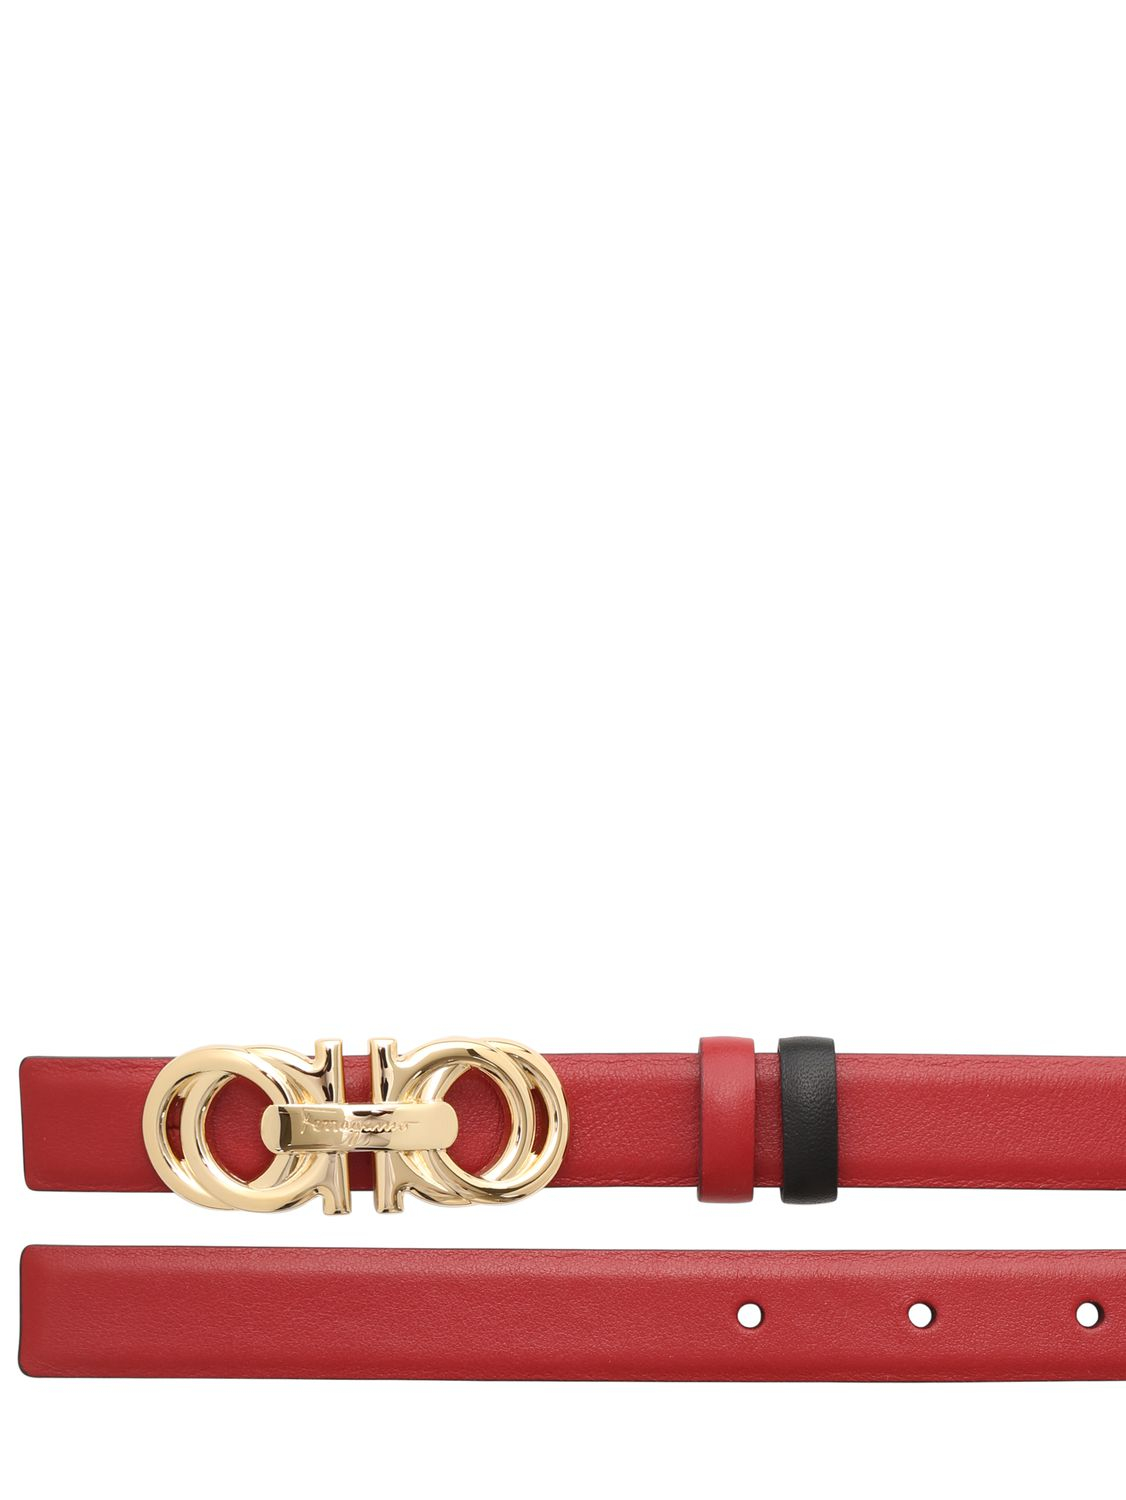 Lyst - Ferragamo Reversible Leather Patent Belt in Red